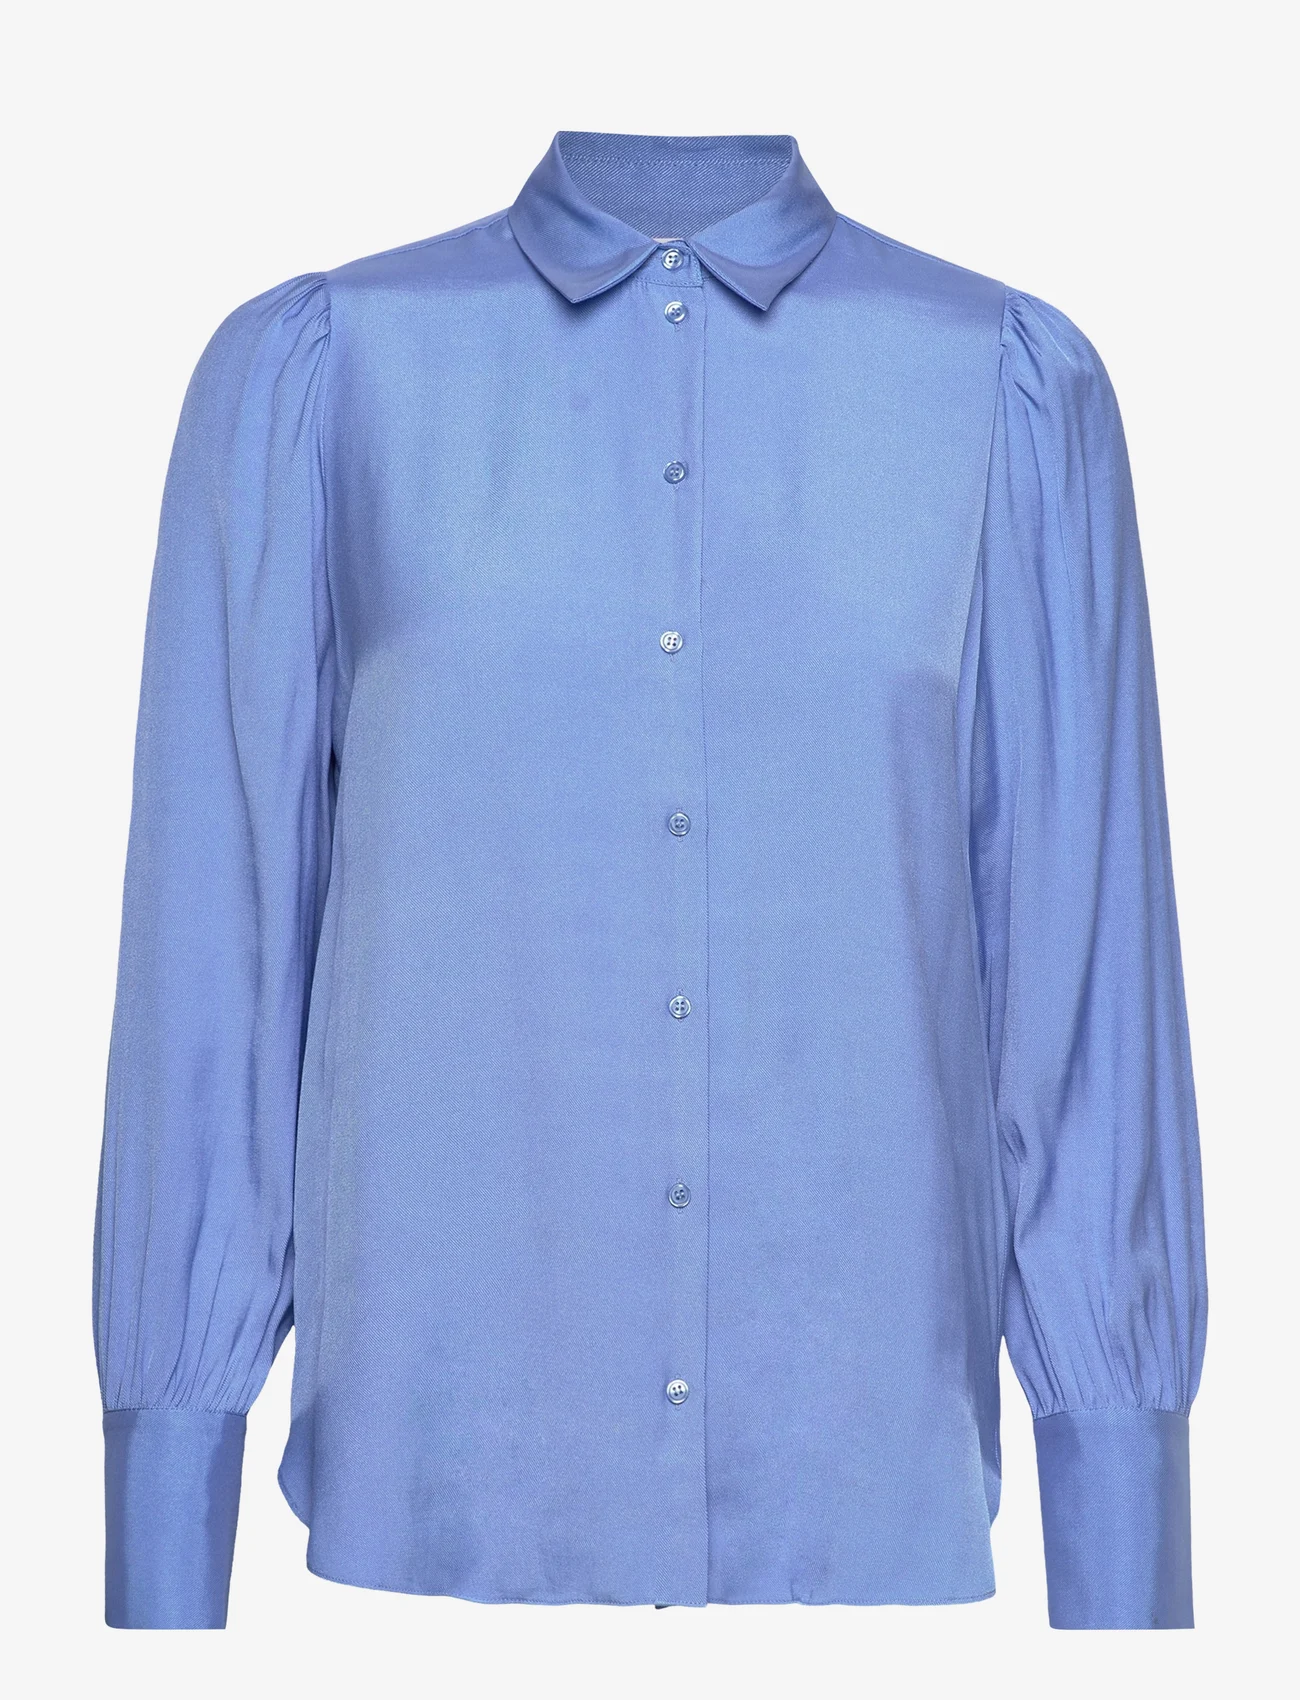 Selected Femme - SLFALFA LS  SHIRT B - långärmade skjortor - ultramarine - 0